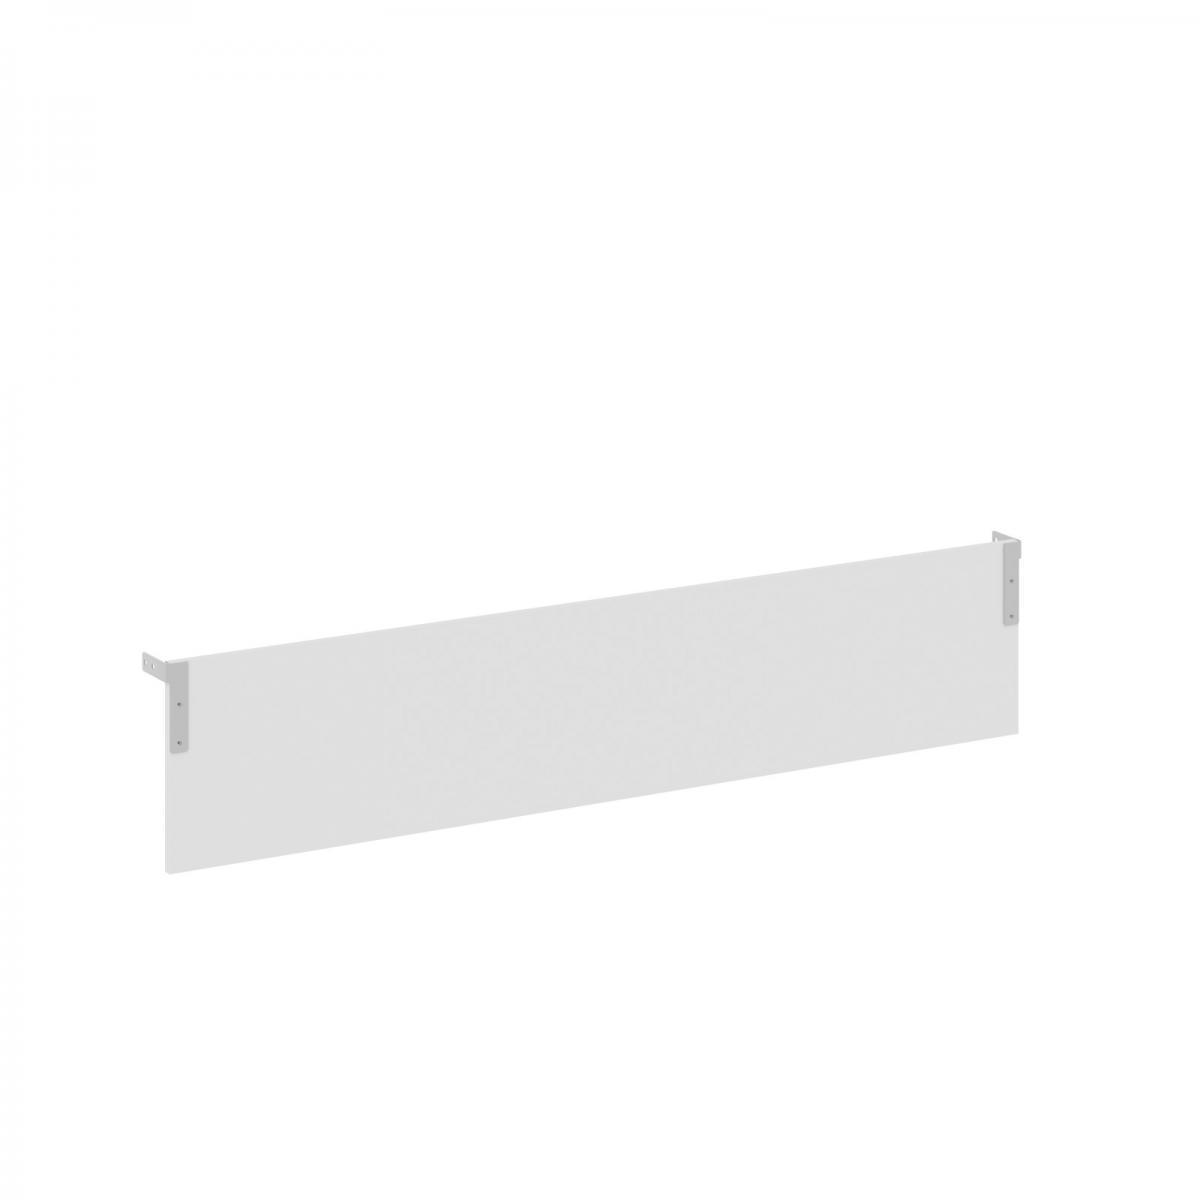 Фронтальная панель подвесная XDST 187 Белый/Алюминий 1700х350х18 XTEN-S